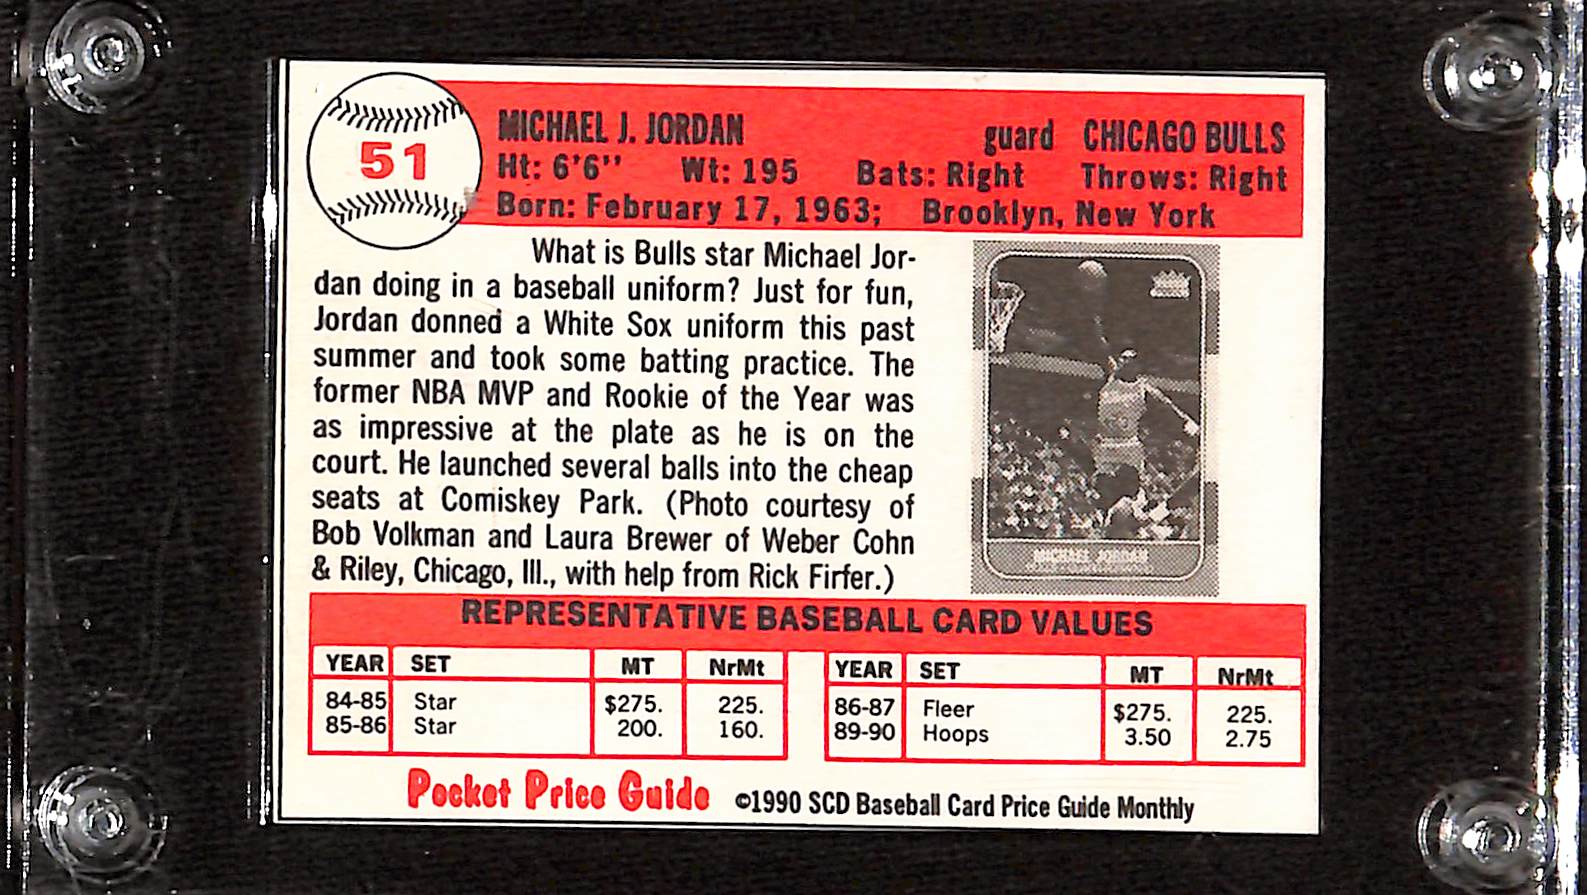 FIINR Baseball Card 1990 Scd Michael Jordan MLB Baseball Card #51 - Pristine - Mint Condition